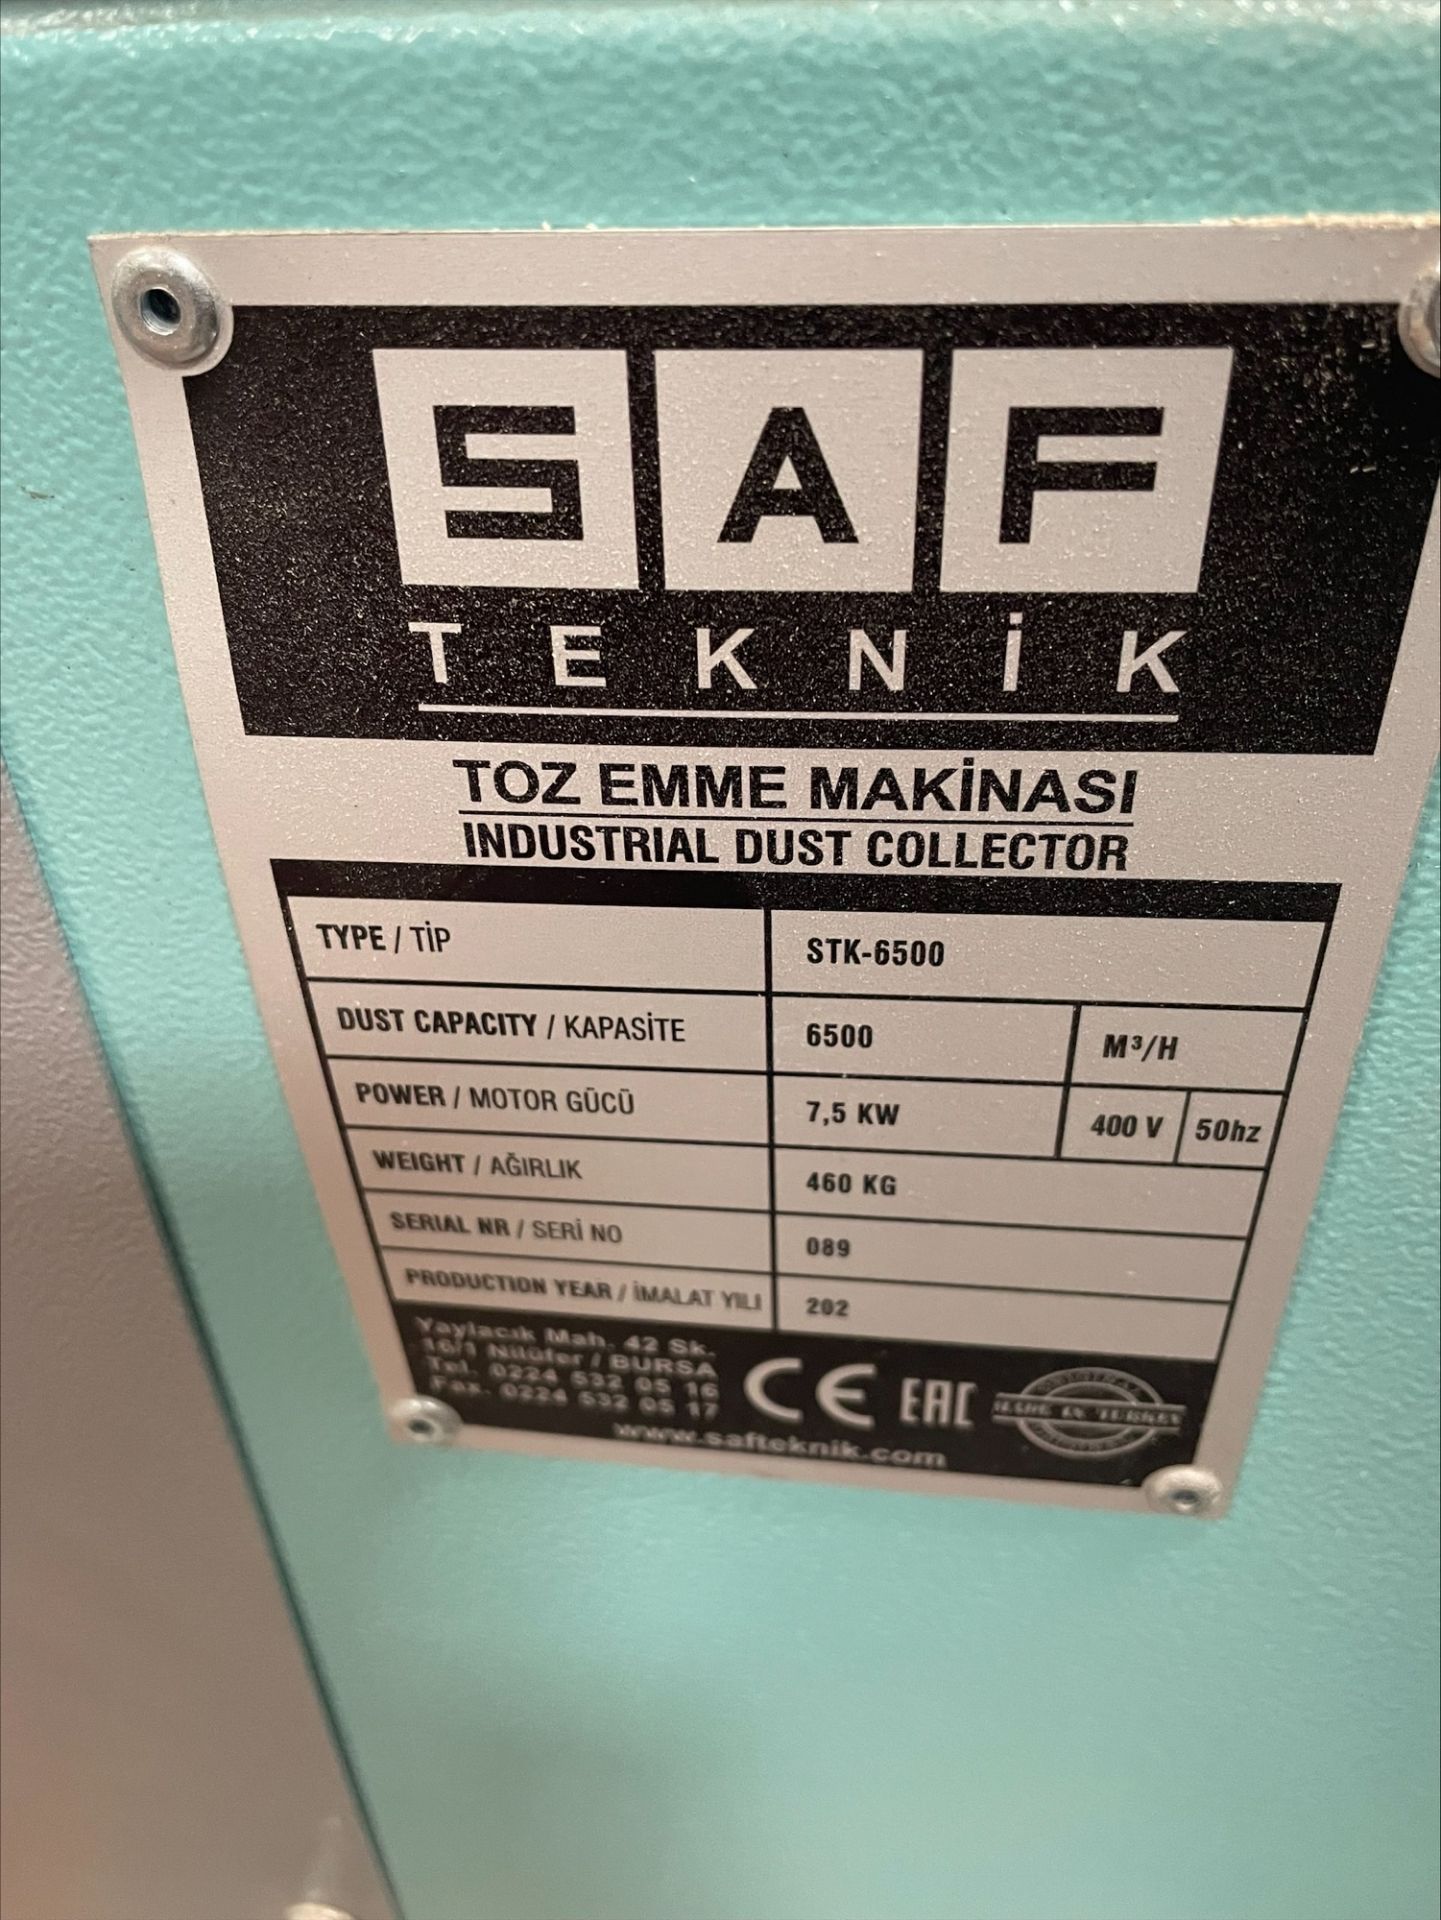 SAF Teknik STK-6500 Dust extraction unit, Serial No. 089 (2022 estimated), power: 7.5kW, dust - Bild 2 aus 5